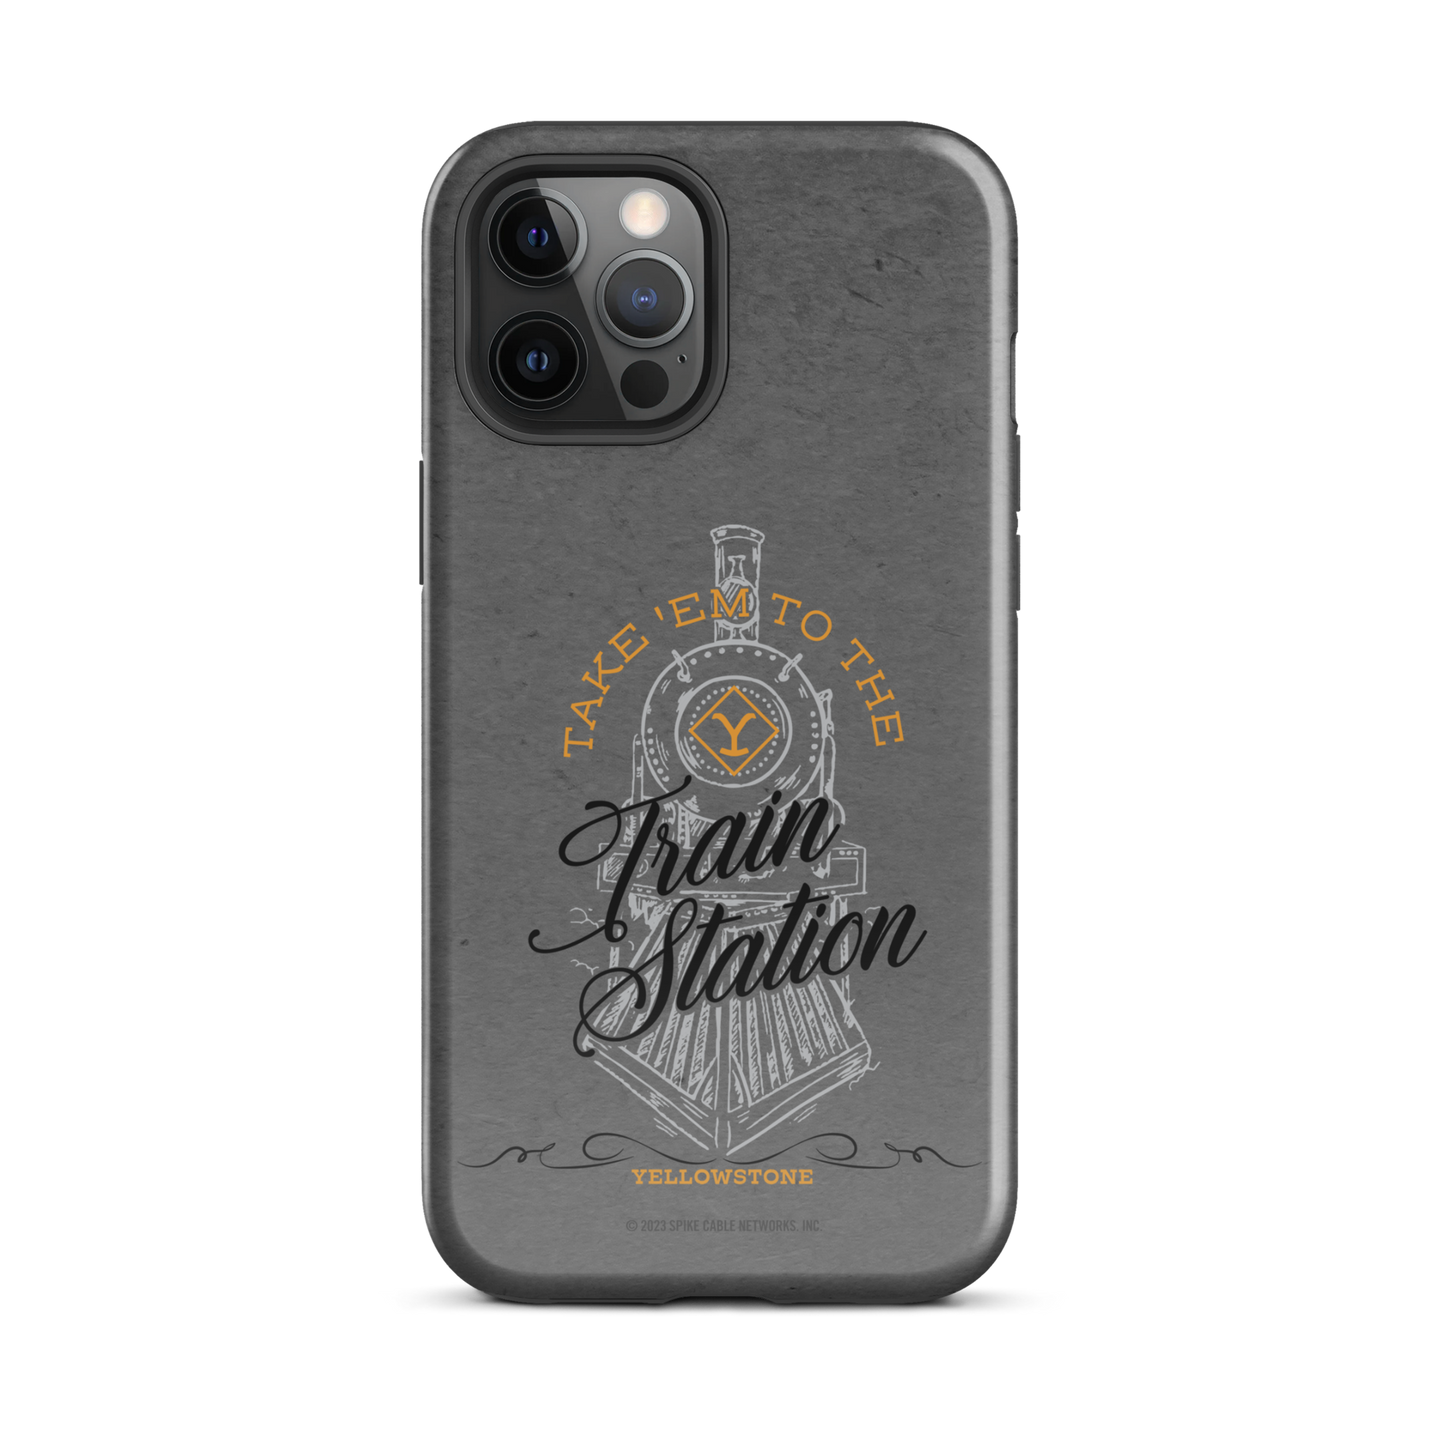 Yellowstone Funda resistente Estación de tren - iPhone